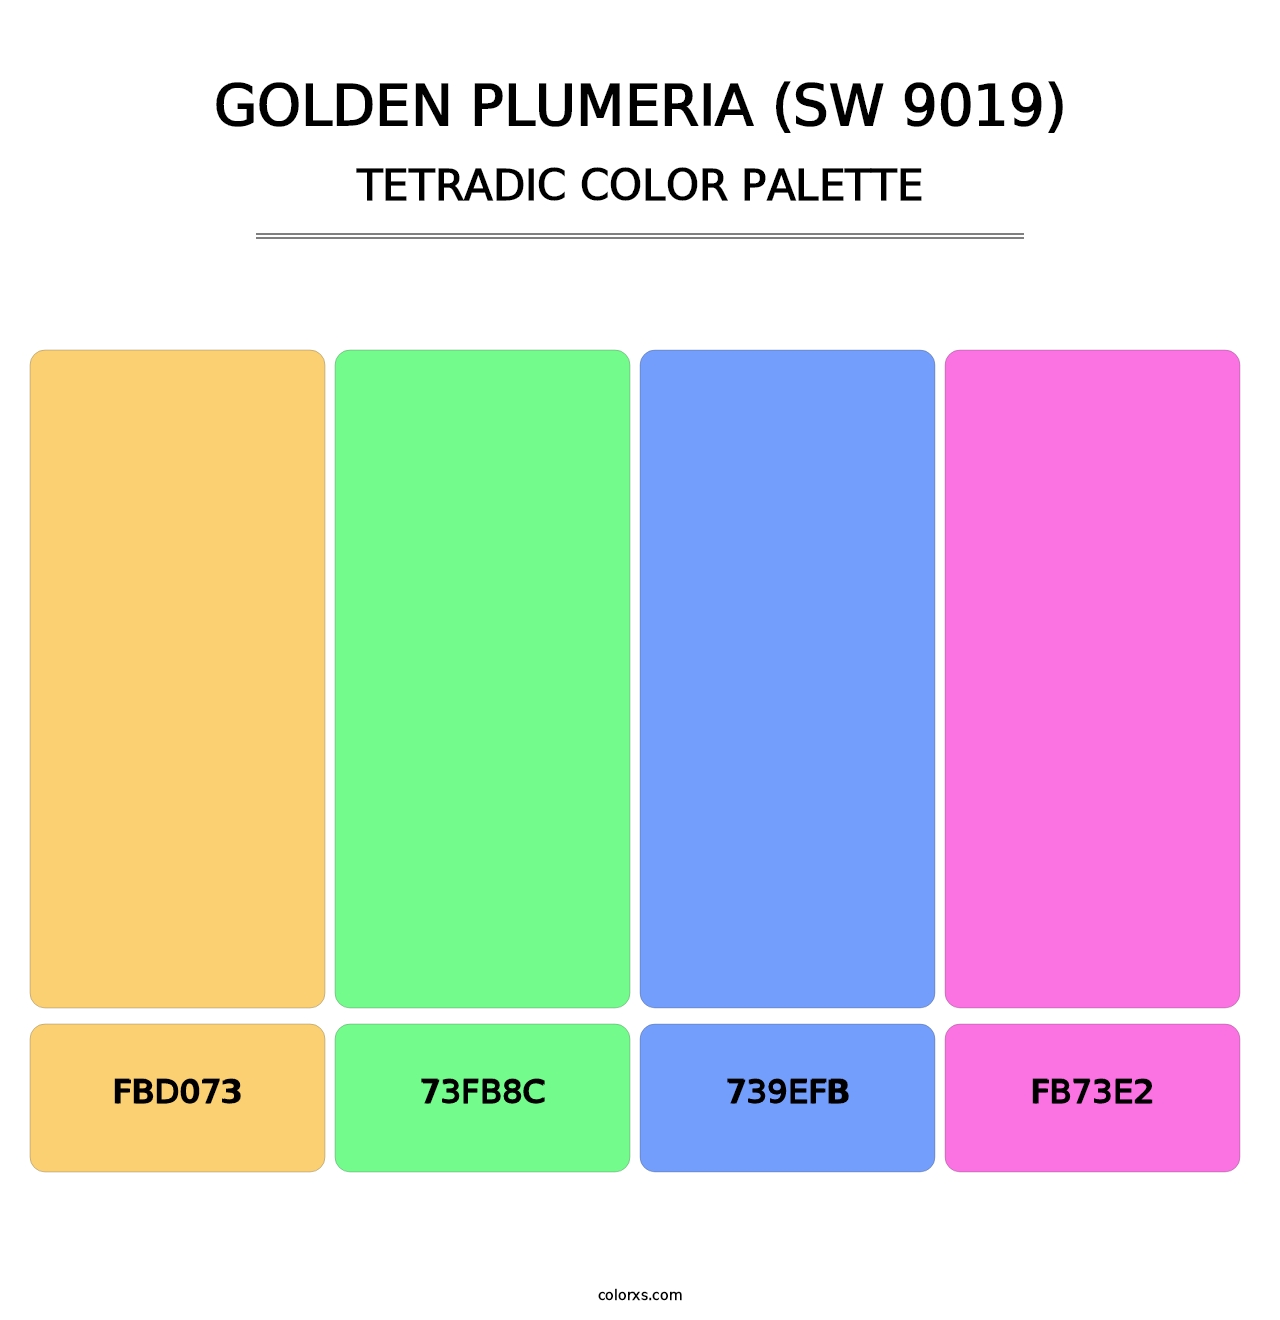 Golden Plumeria (SW 9019) - Tetradic Color Palette